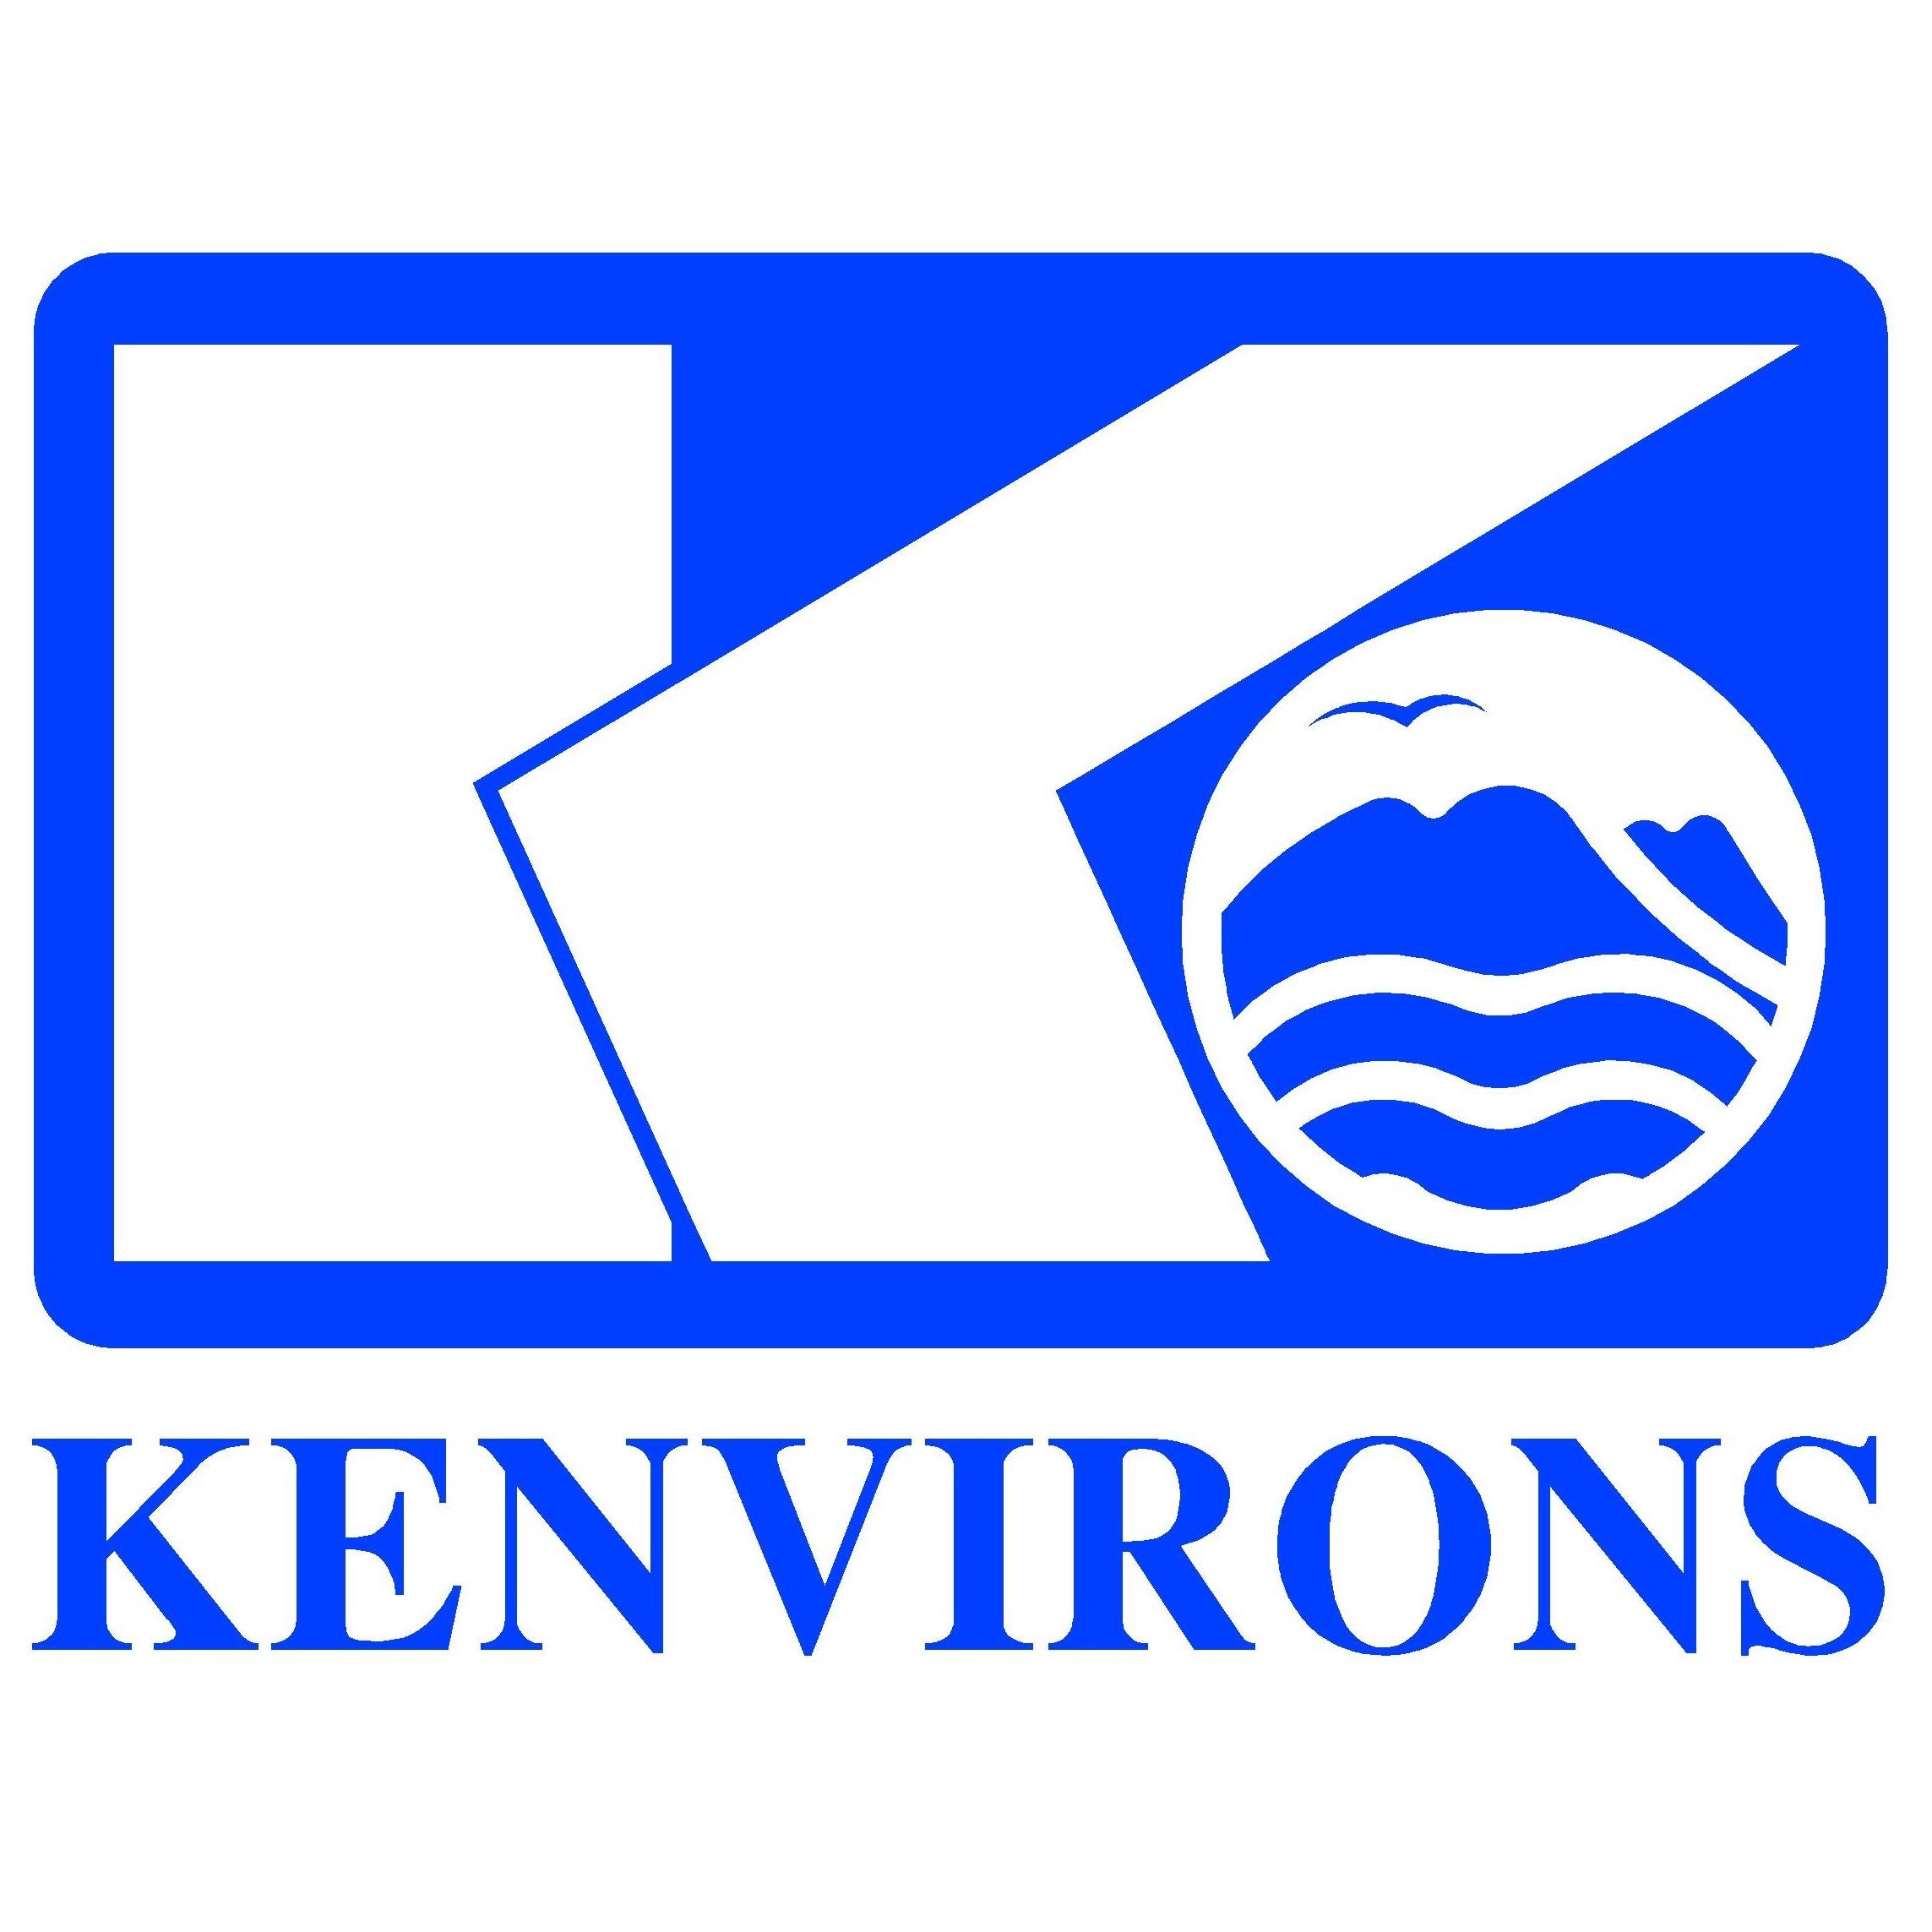 Kenvirons, Inc. Logo